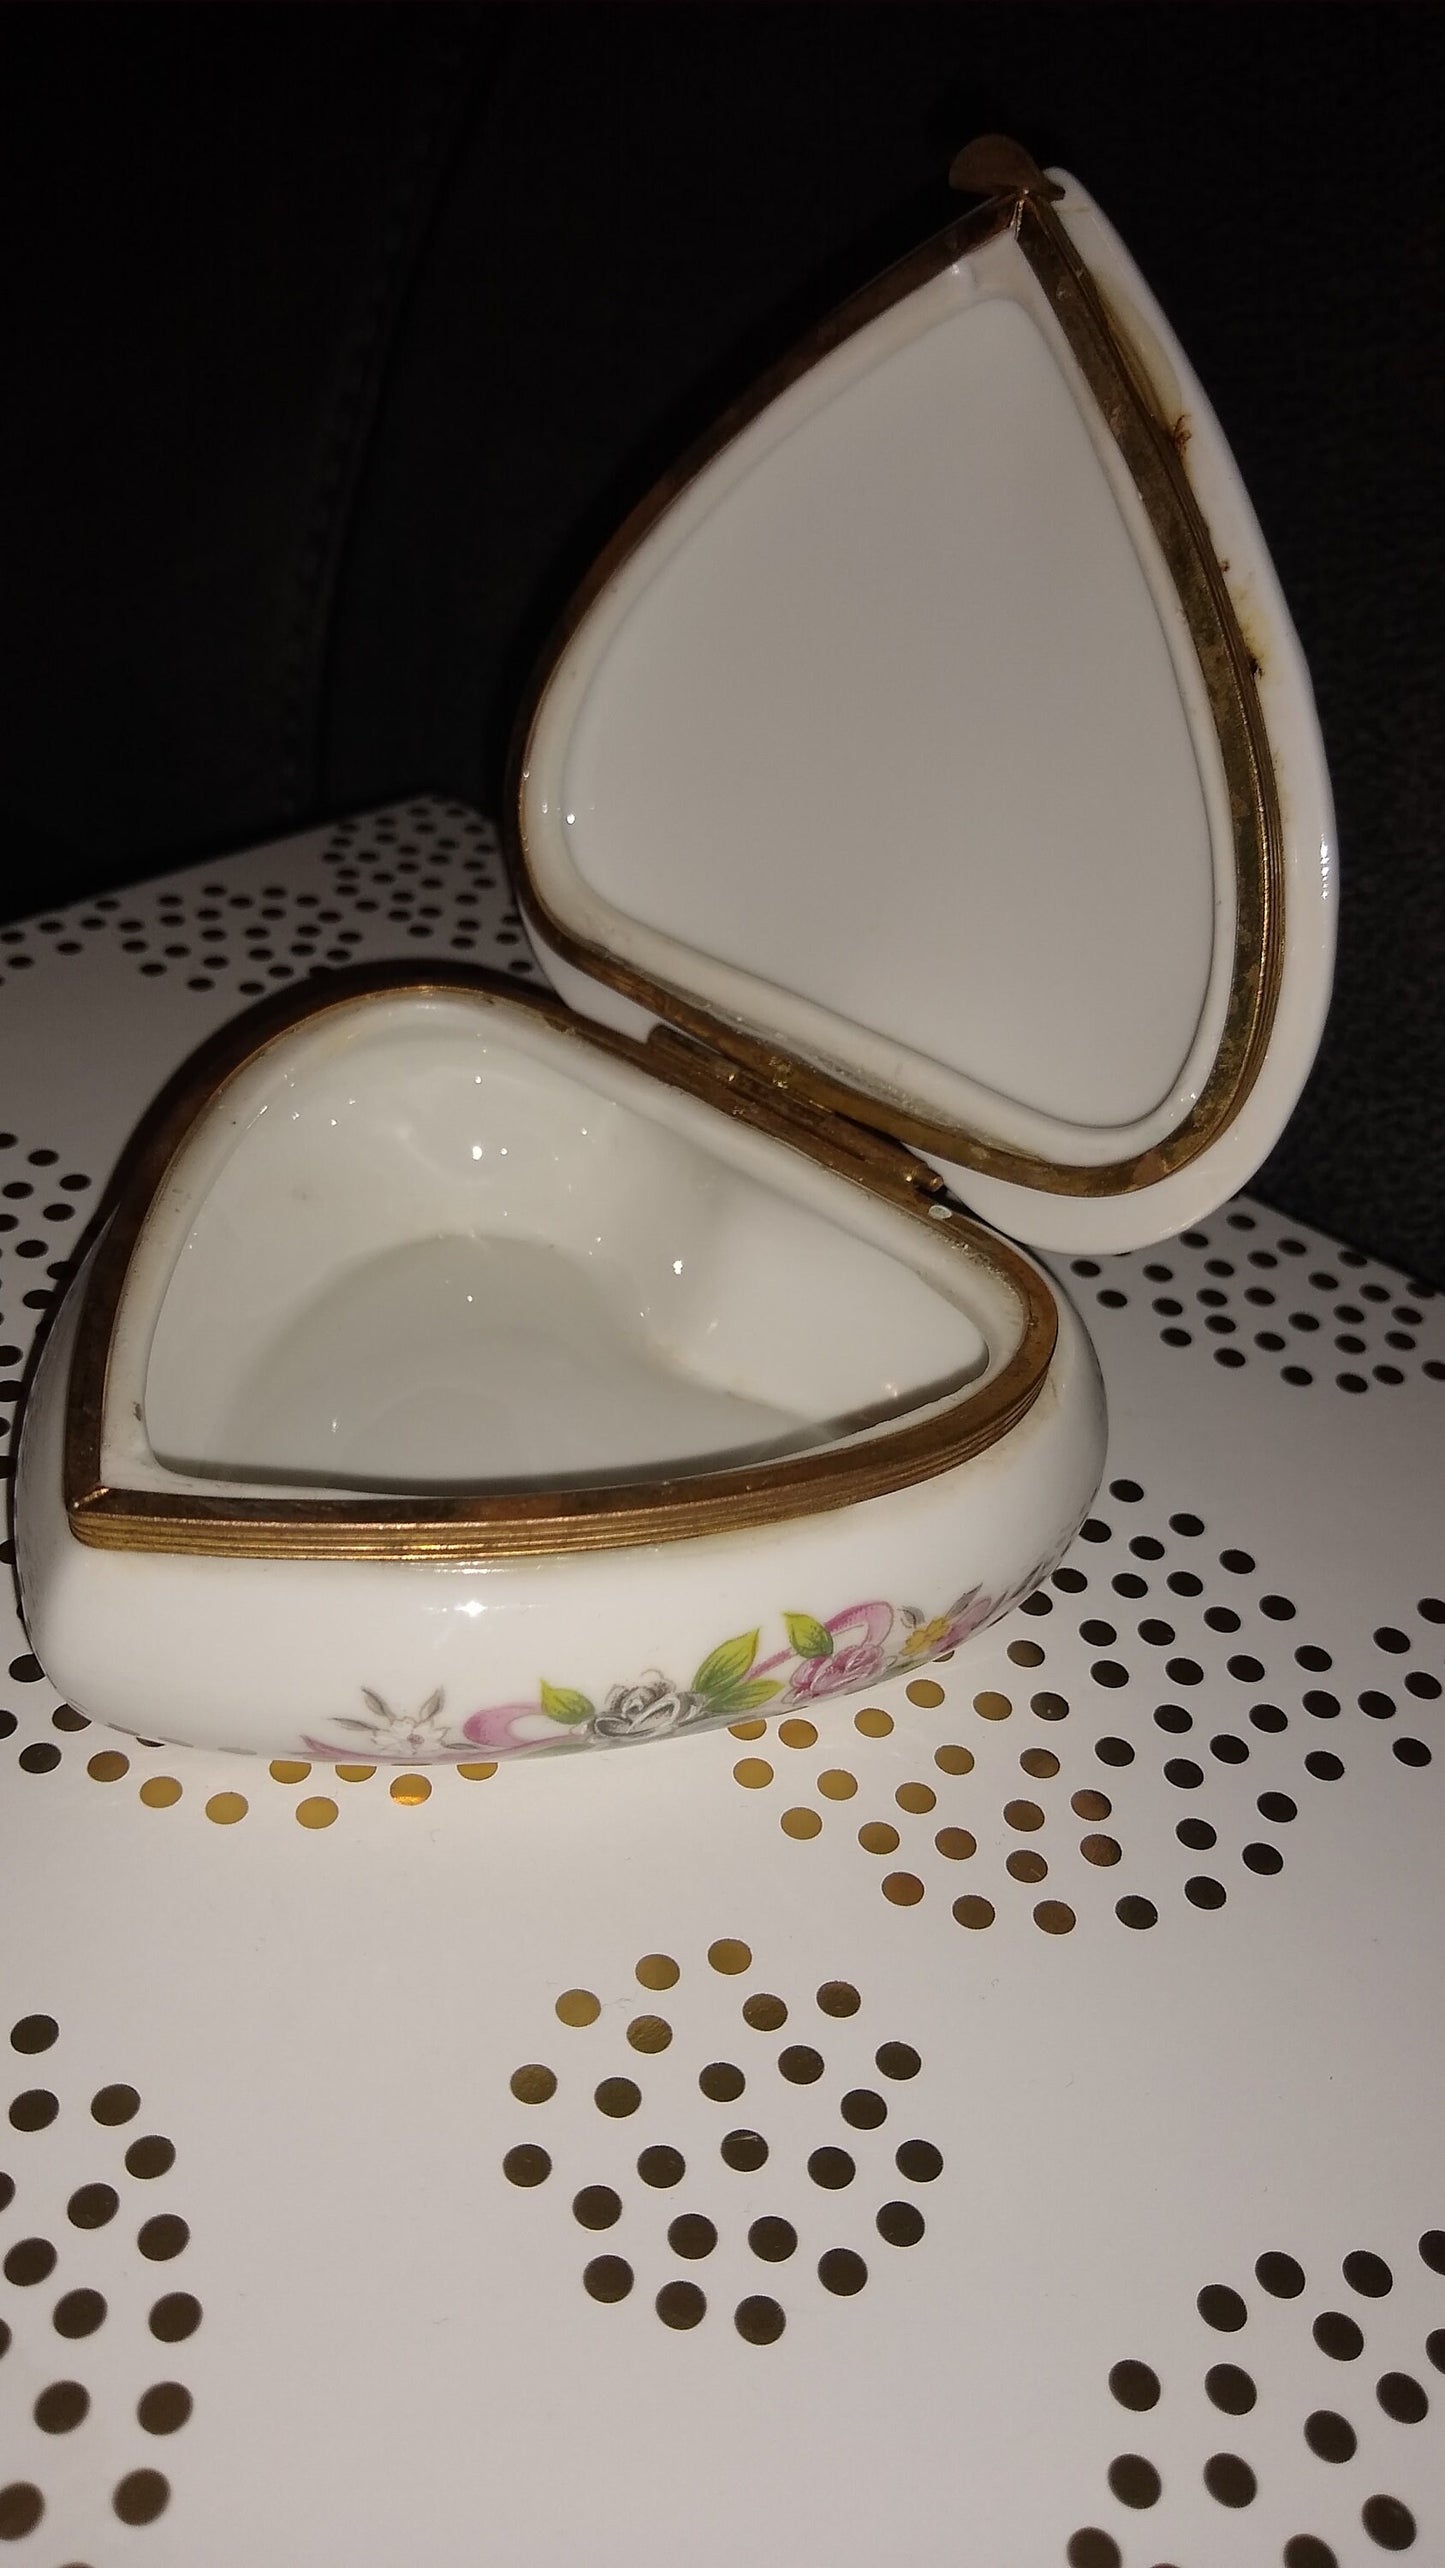 Happy Anniversary Vintage Heart Jewelry, Trinket Box